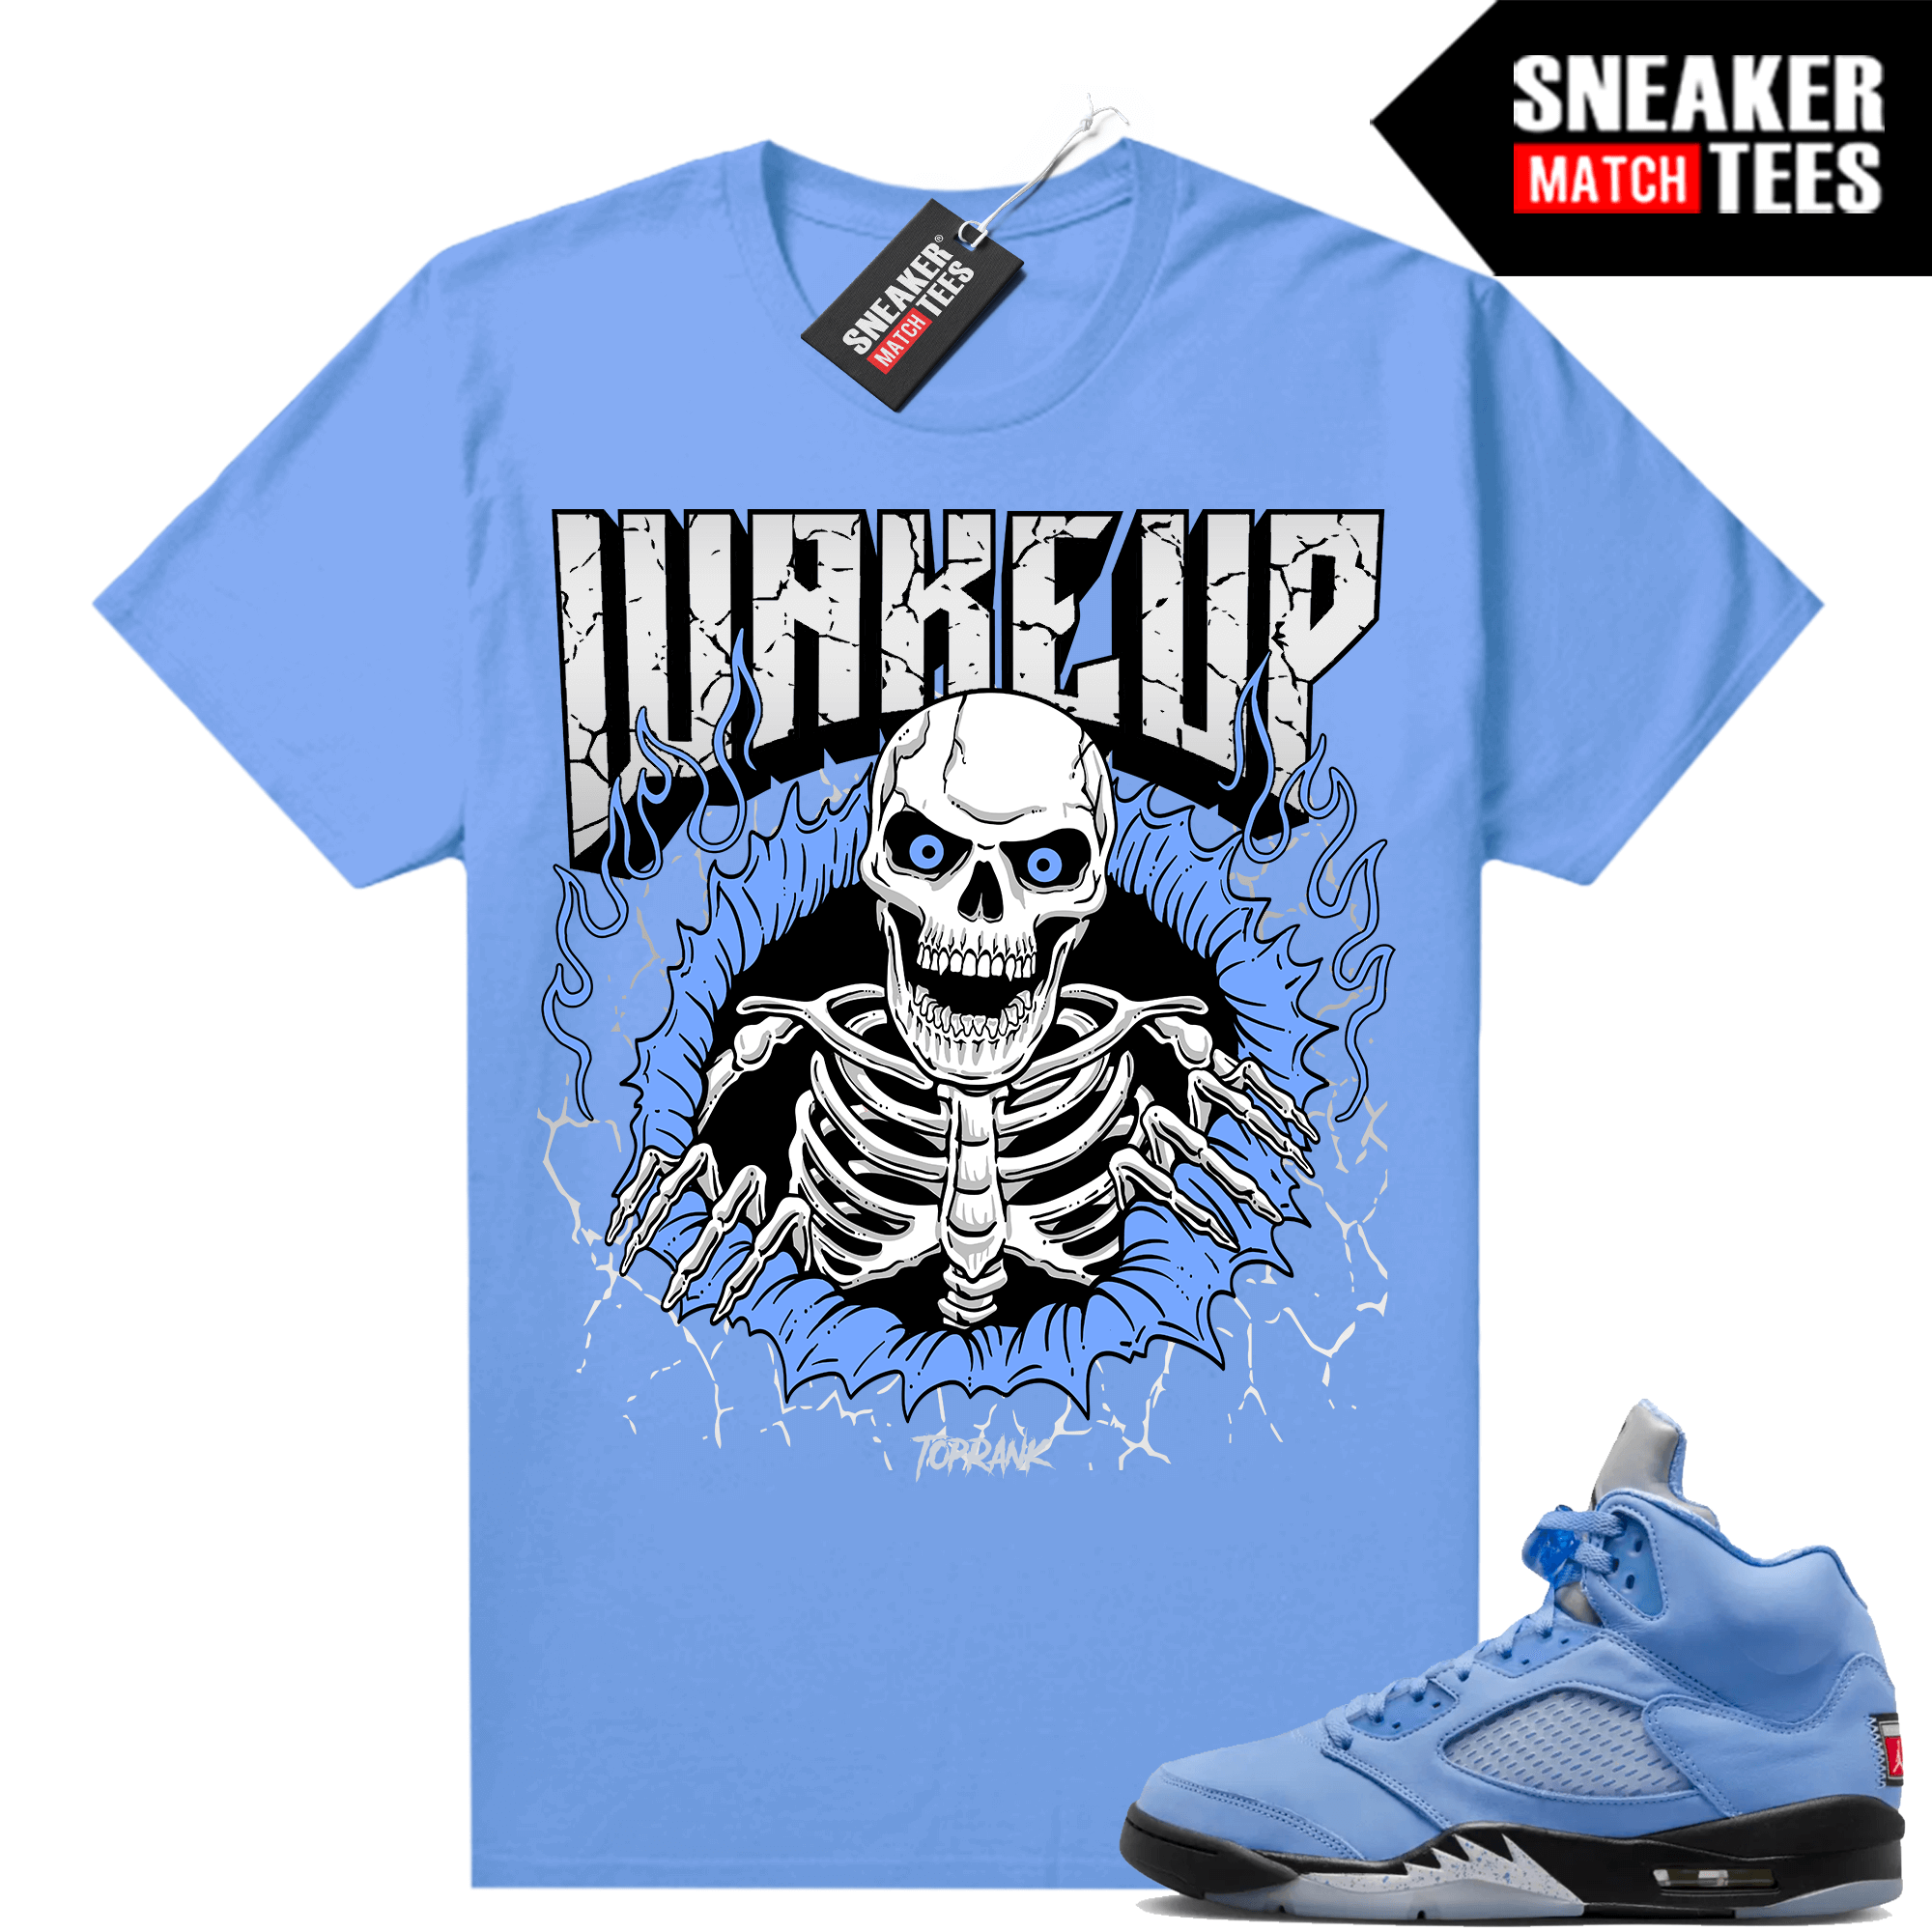 Jordan 3 'Slam Dunk' Detailed Look shirts Runtrendy Sneaker Match University Blue Toprank Wakeup